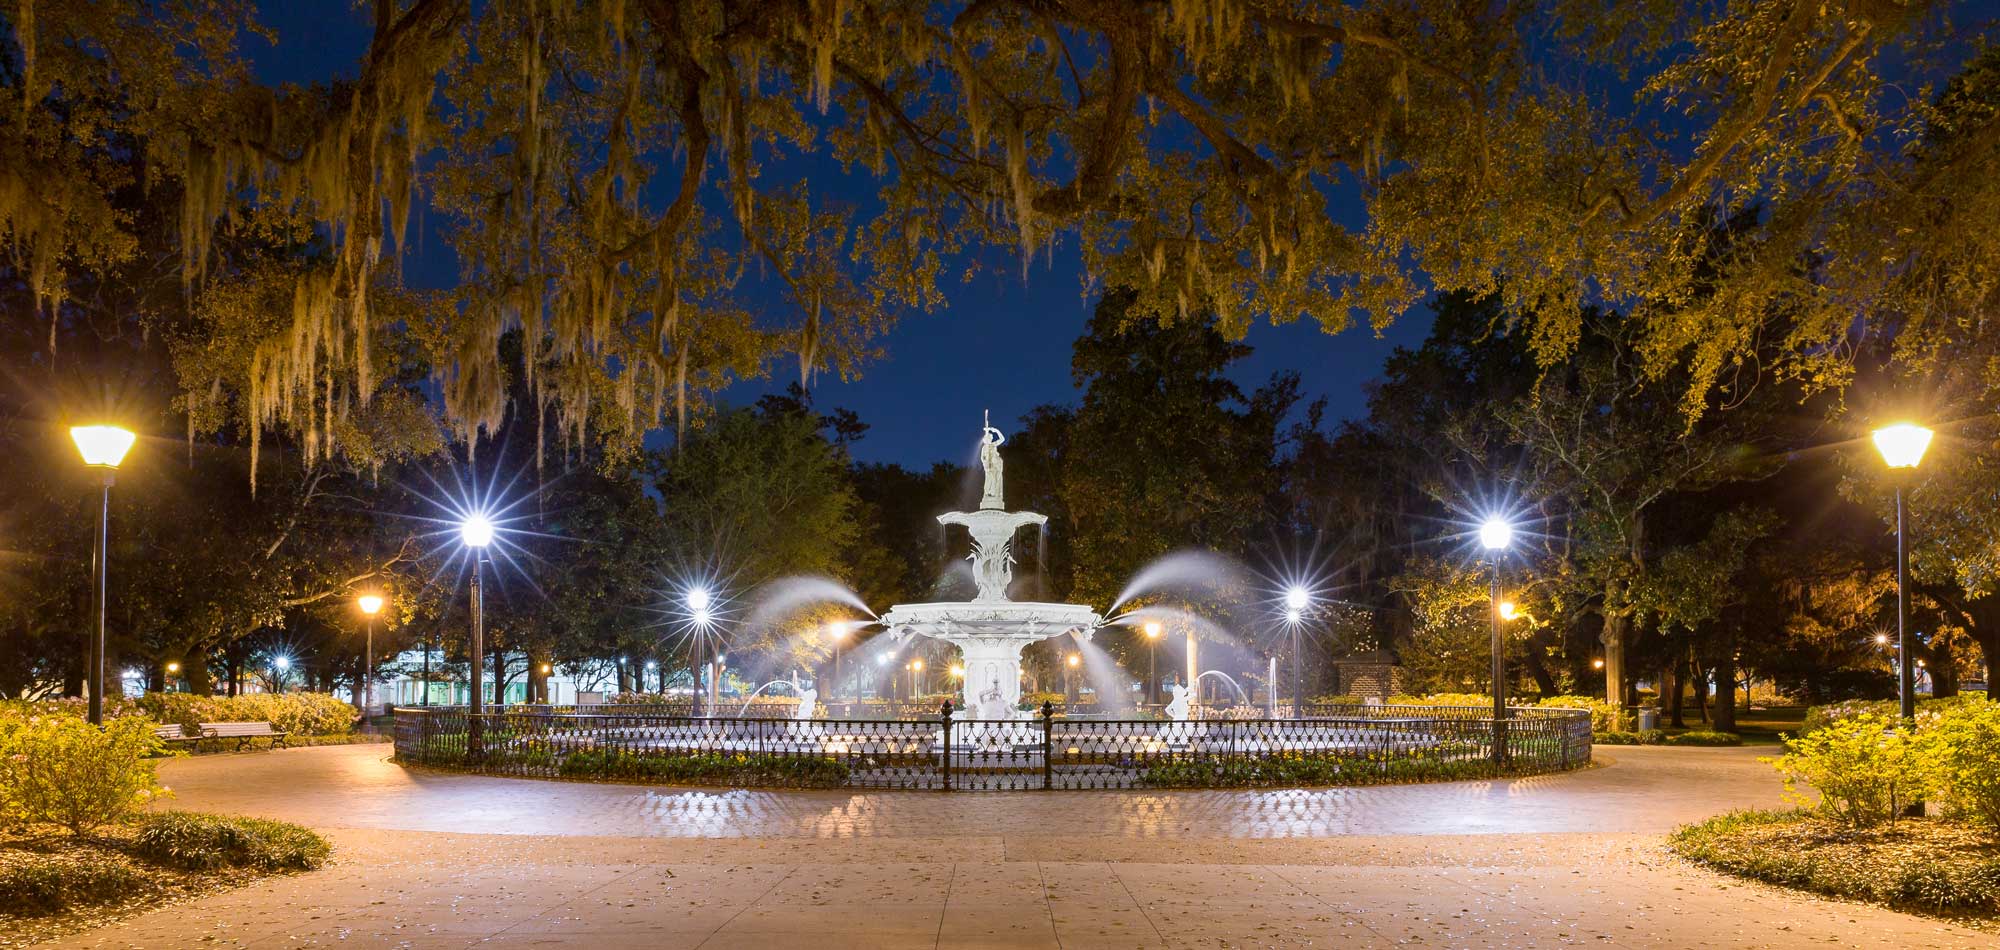 Water fountain at night - Forsyth fountain in historic Savannah, Georgia.